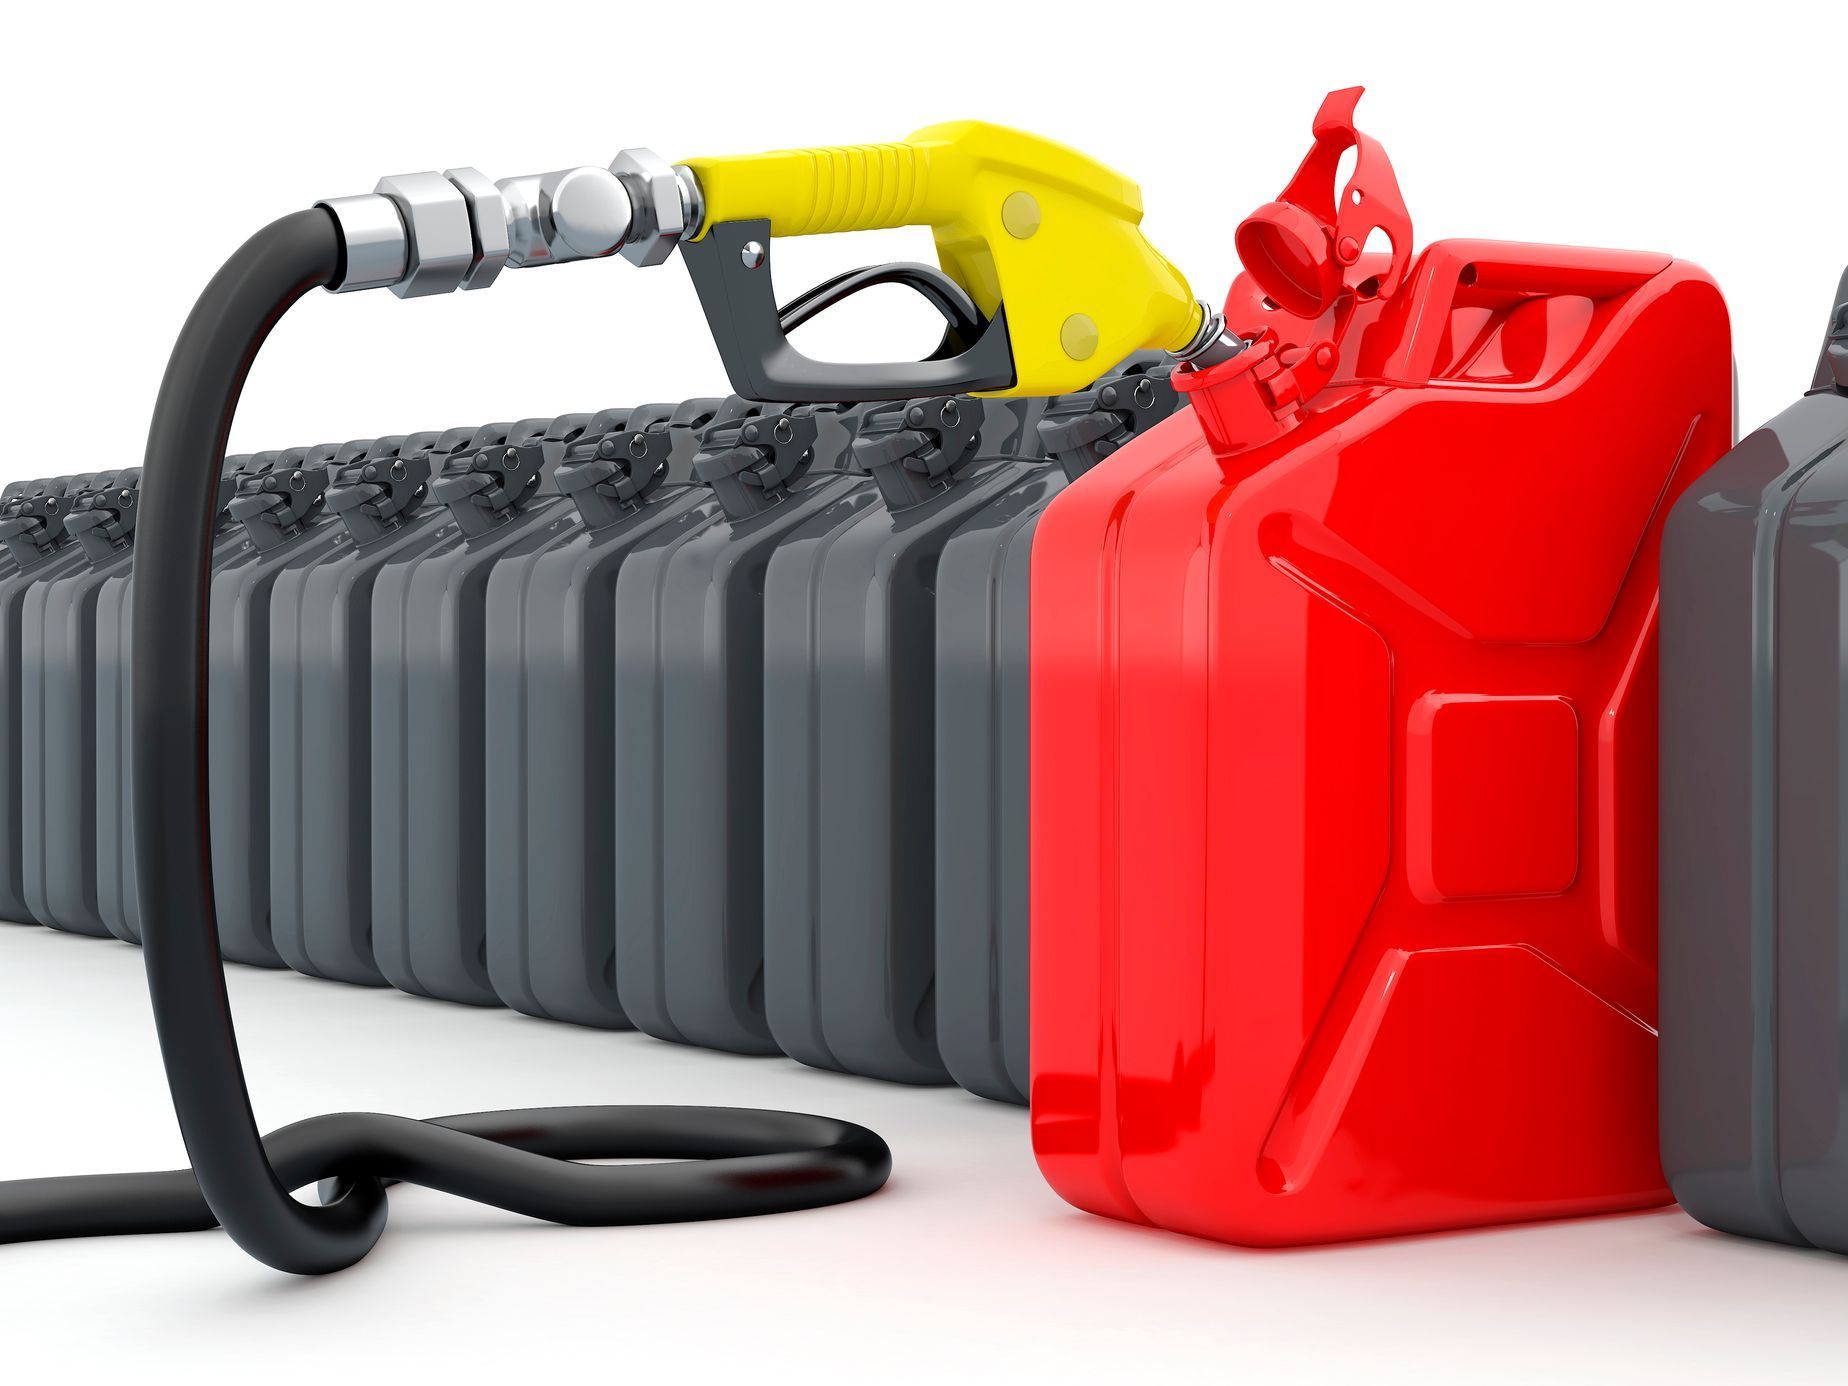 Ropa, benzin, kanystr, ilustrační foto